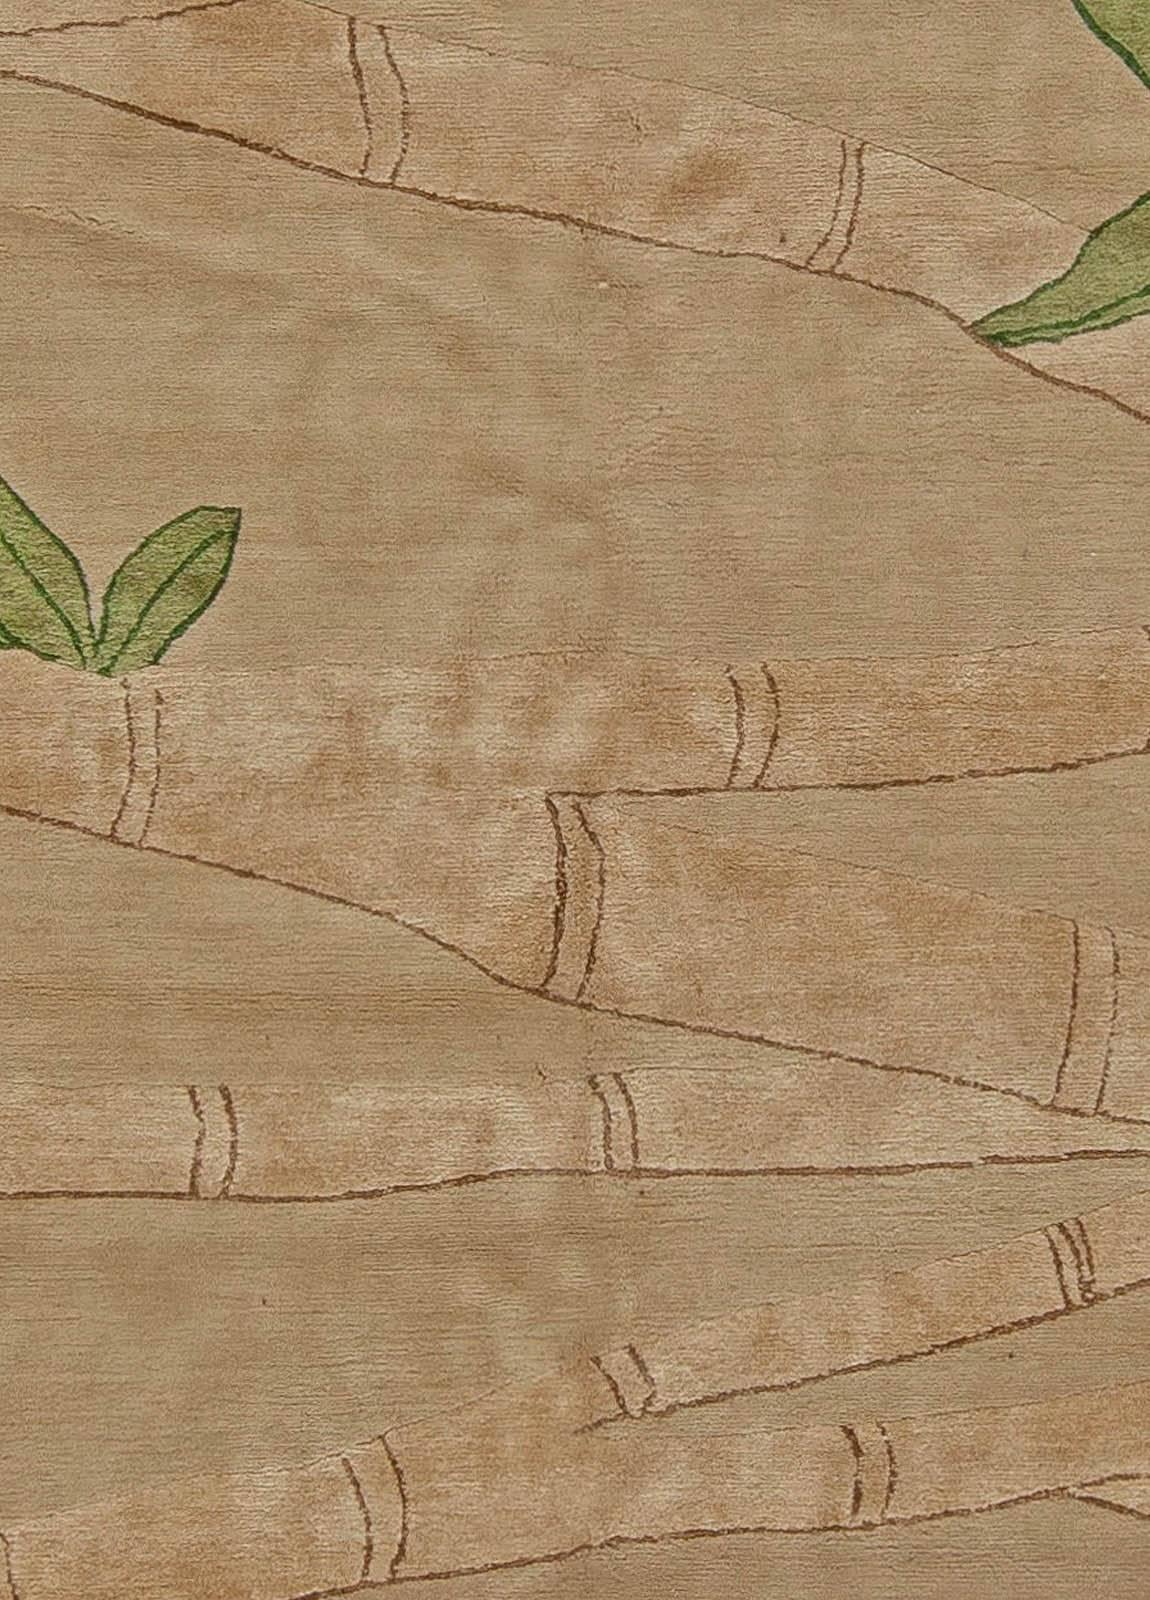 Contemporary bamboo handmade wool and silk rug by Doris Leslie Blau.
Size: 9'0